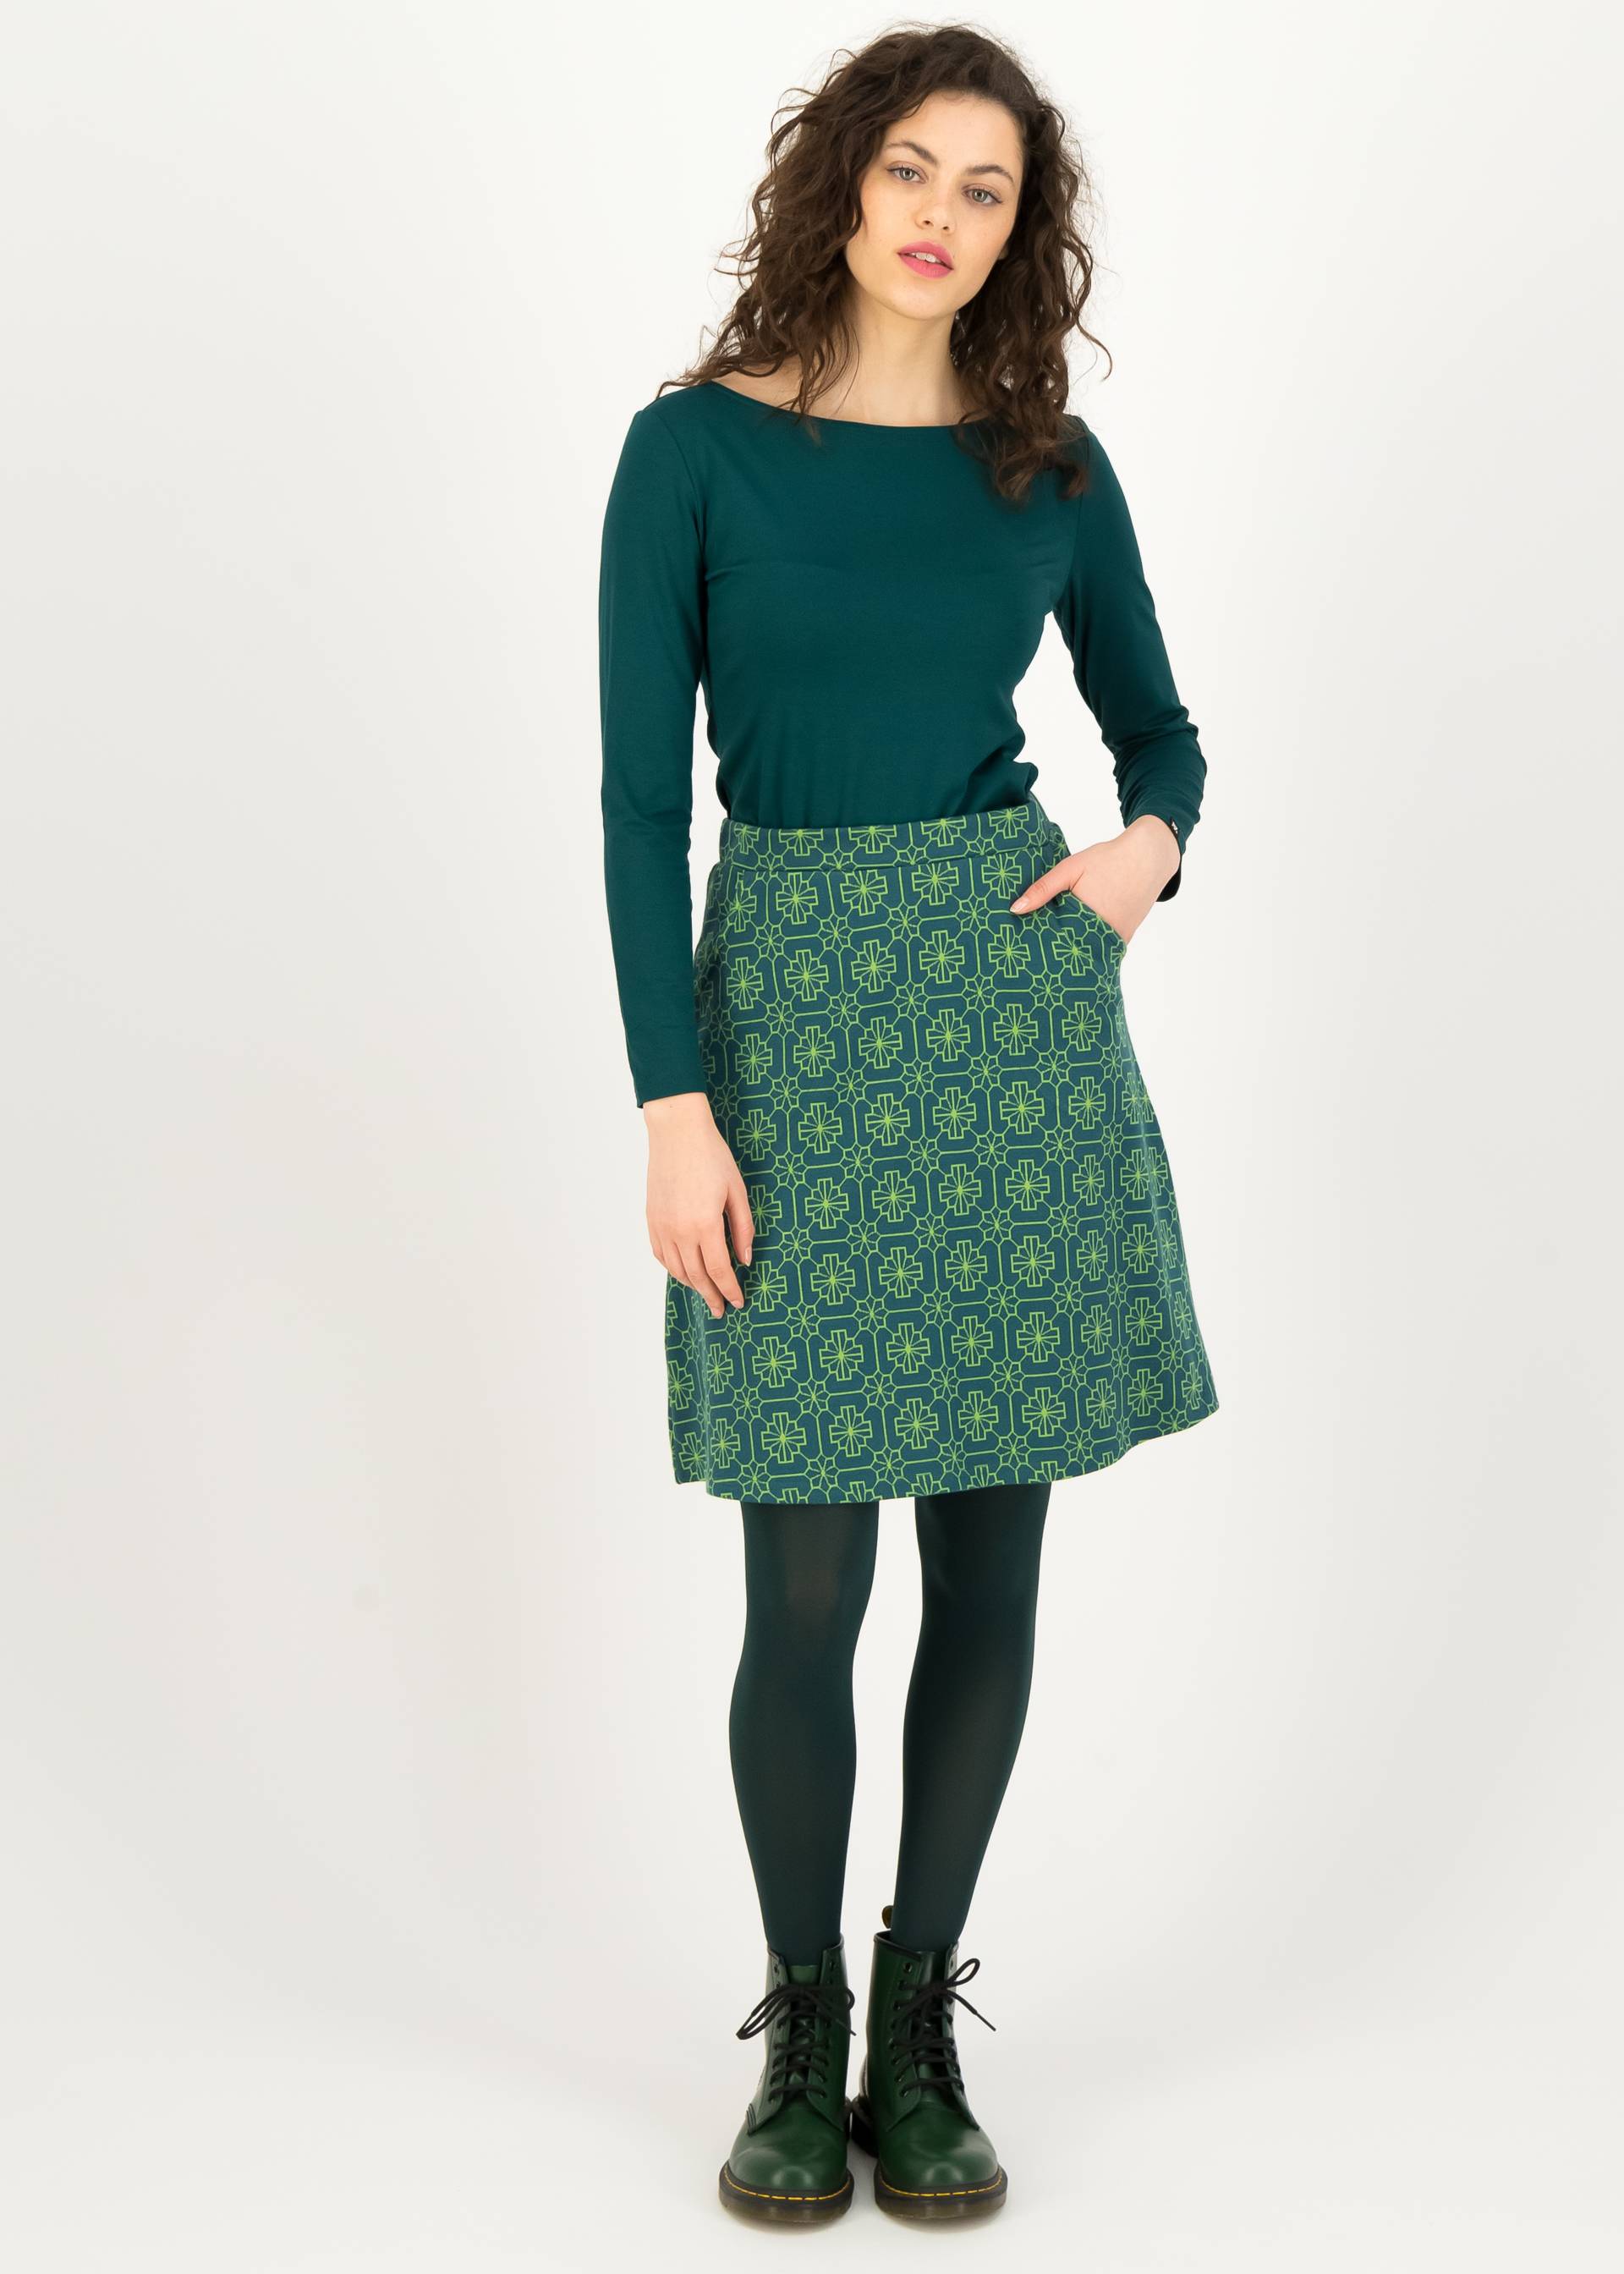 Mini Skirt Jackie oh, green mosaic flower, Skirts, Green